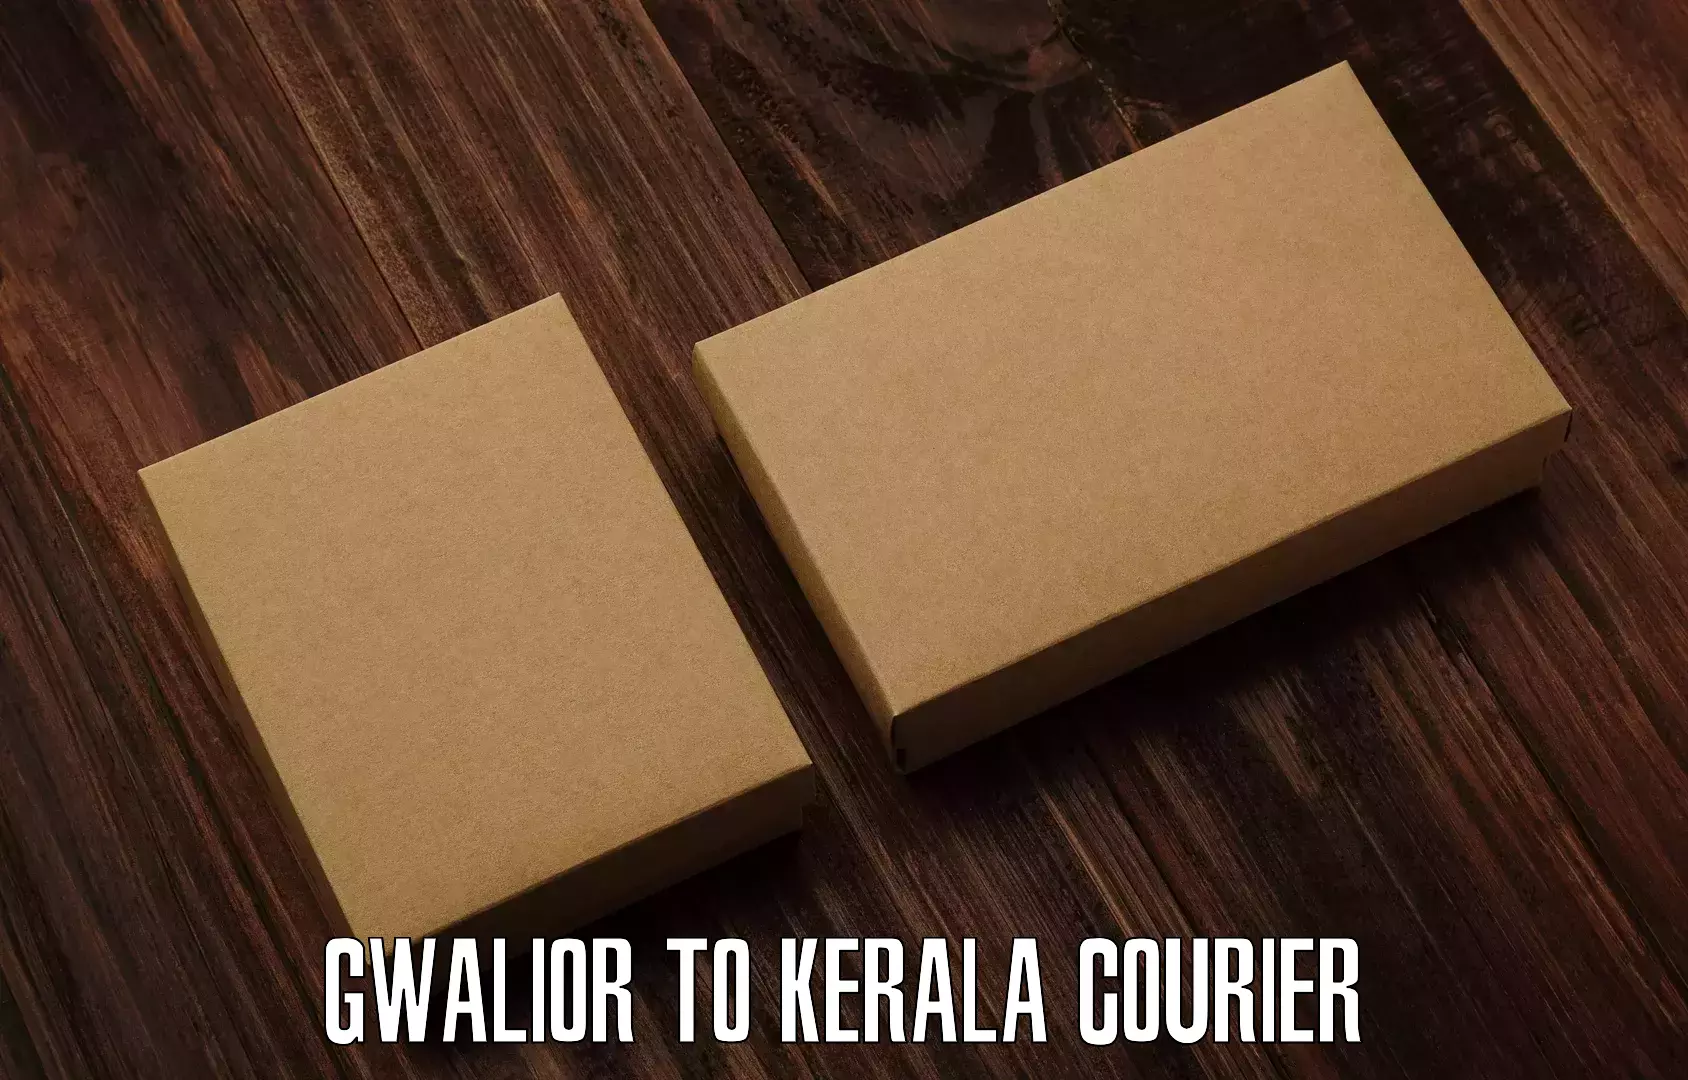 Courier service partnerships Gwalior to Kuchi